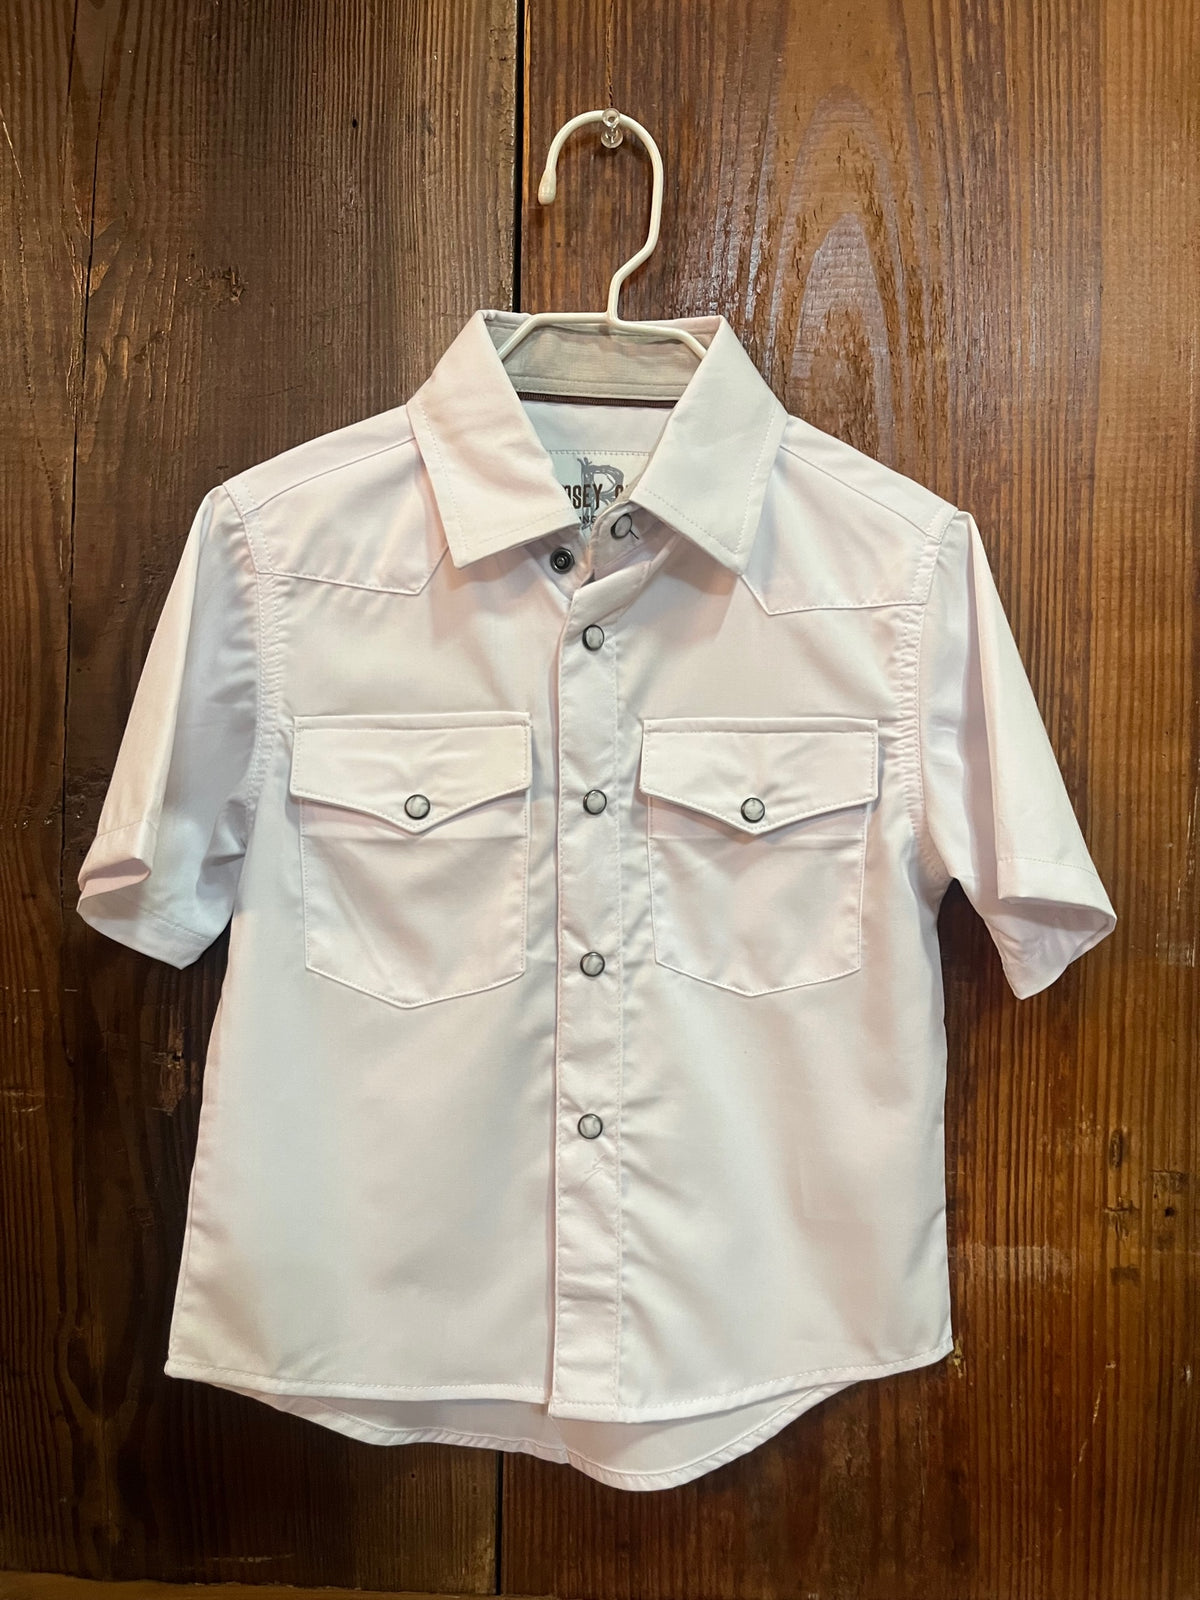 Rumsey Creek White Reata Cowboy Fit Shirt